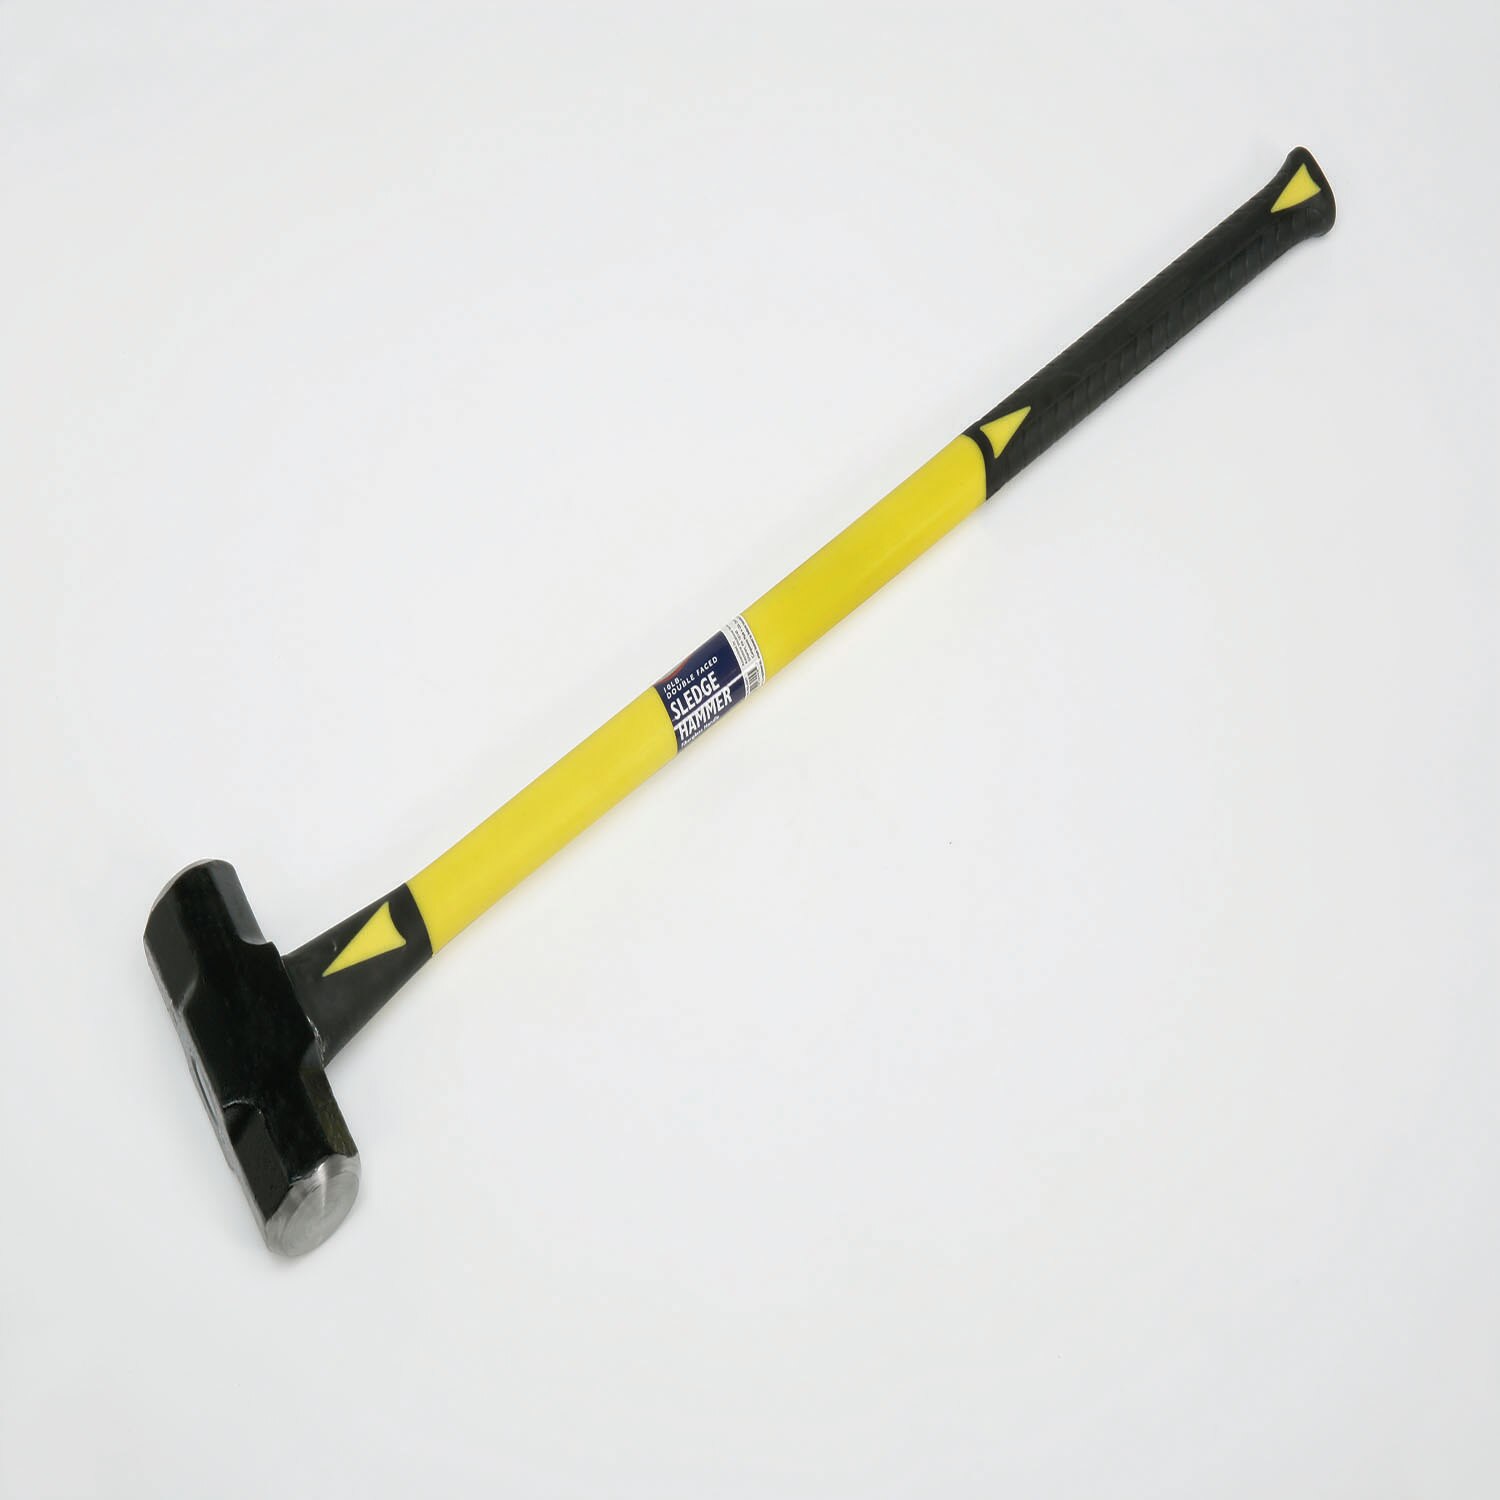 Hammer - 10 lb, Sledge, Double-Faced, 34" Fiberglass Handle, Cushioned Grip